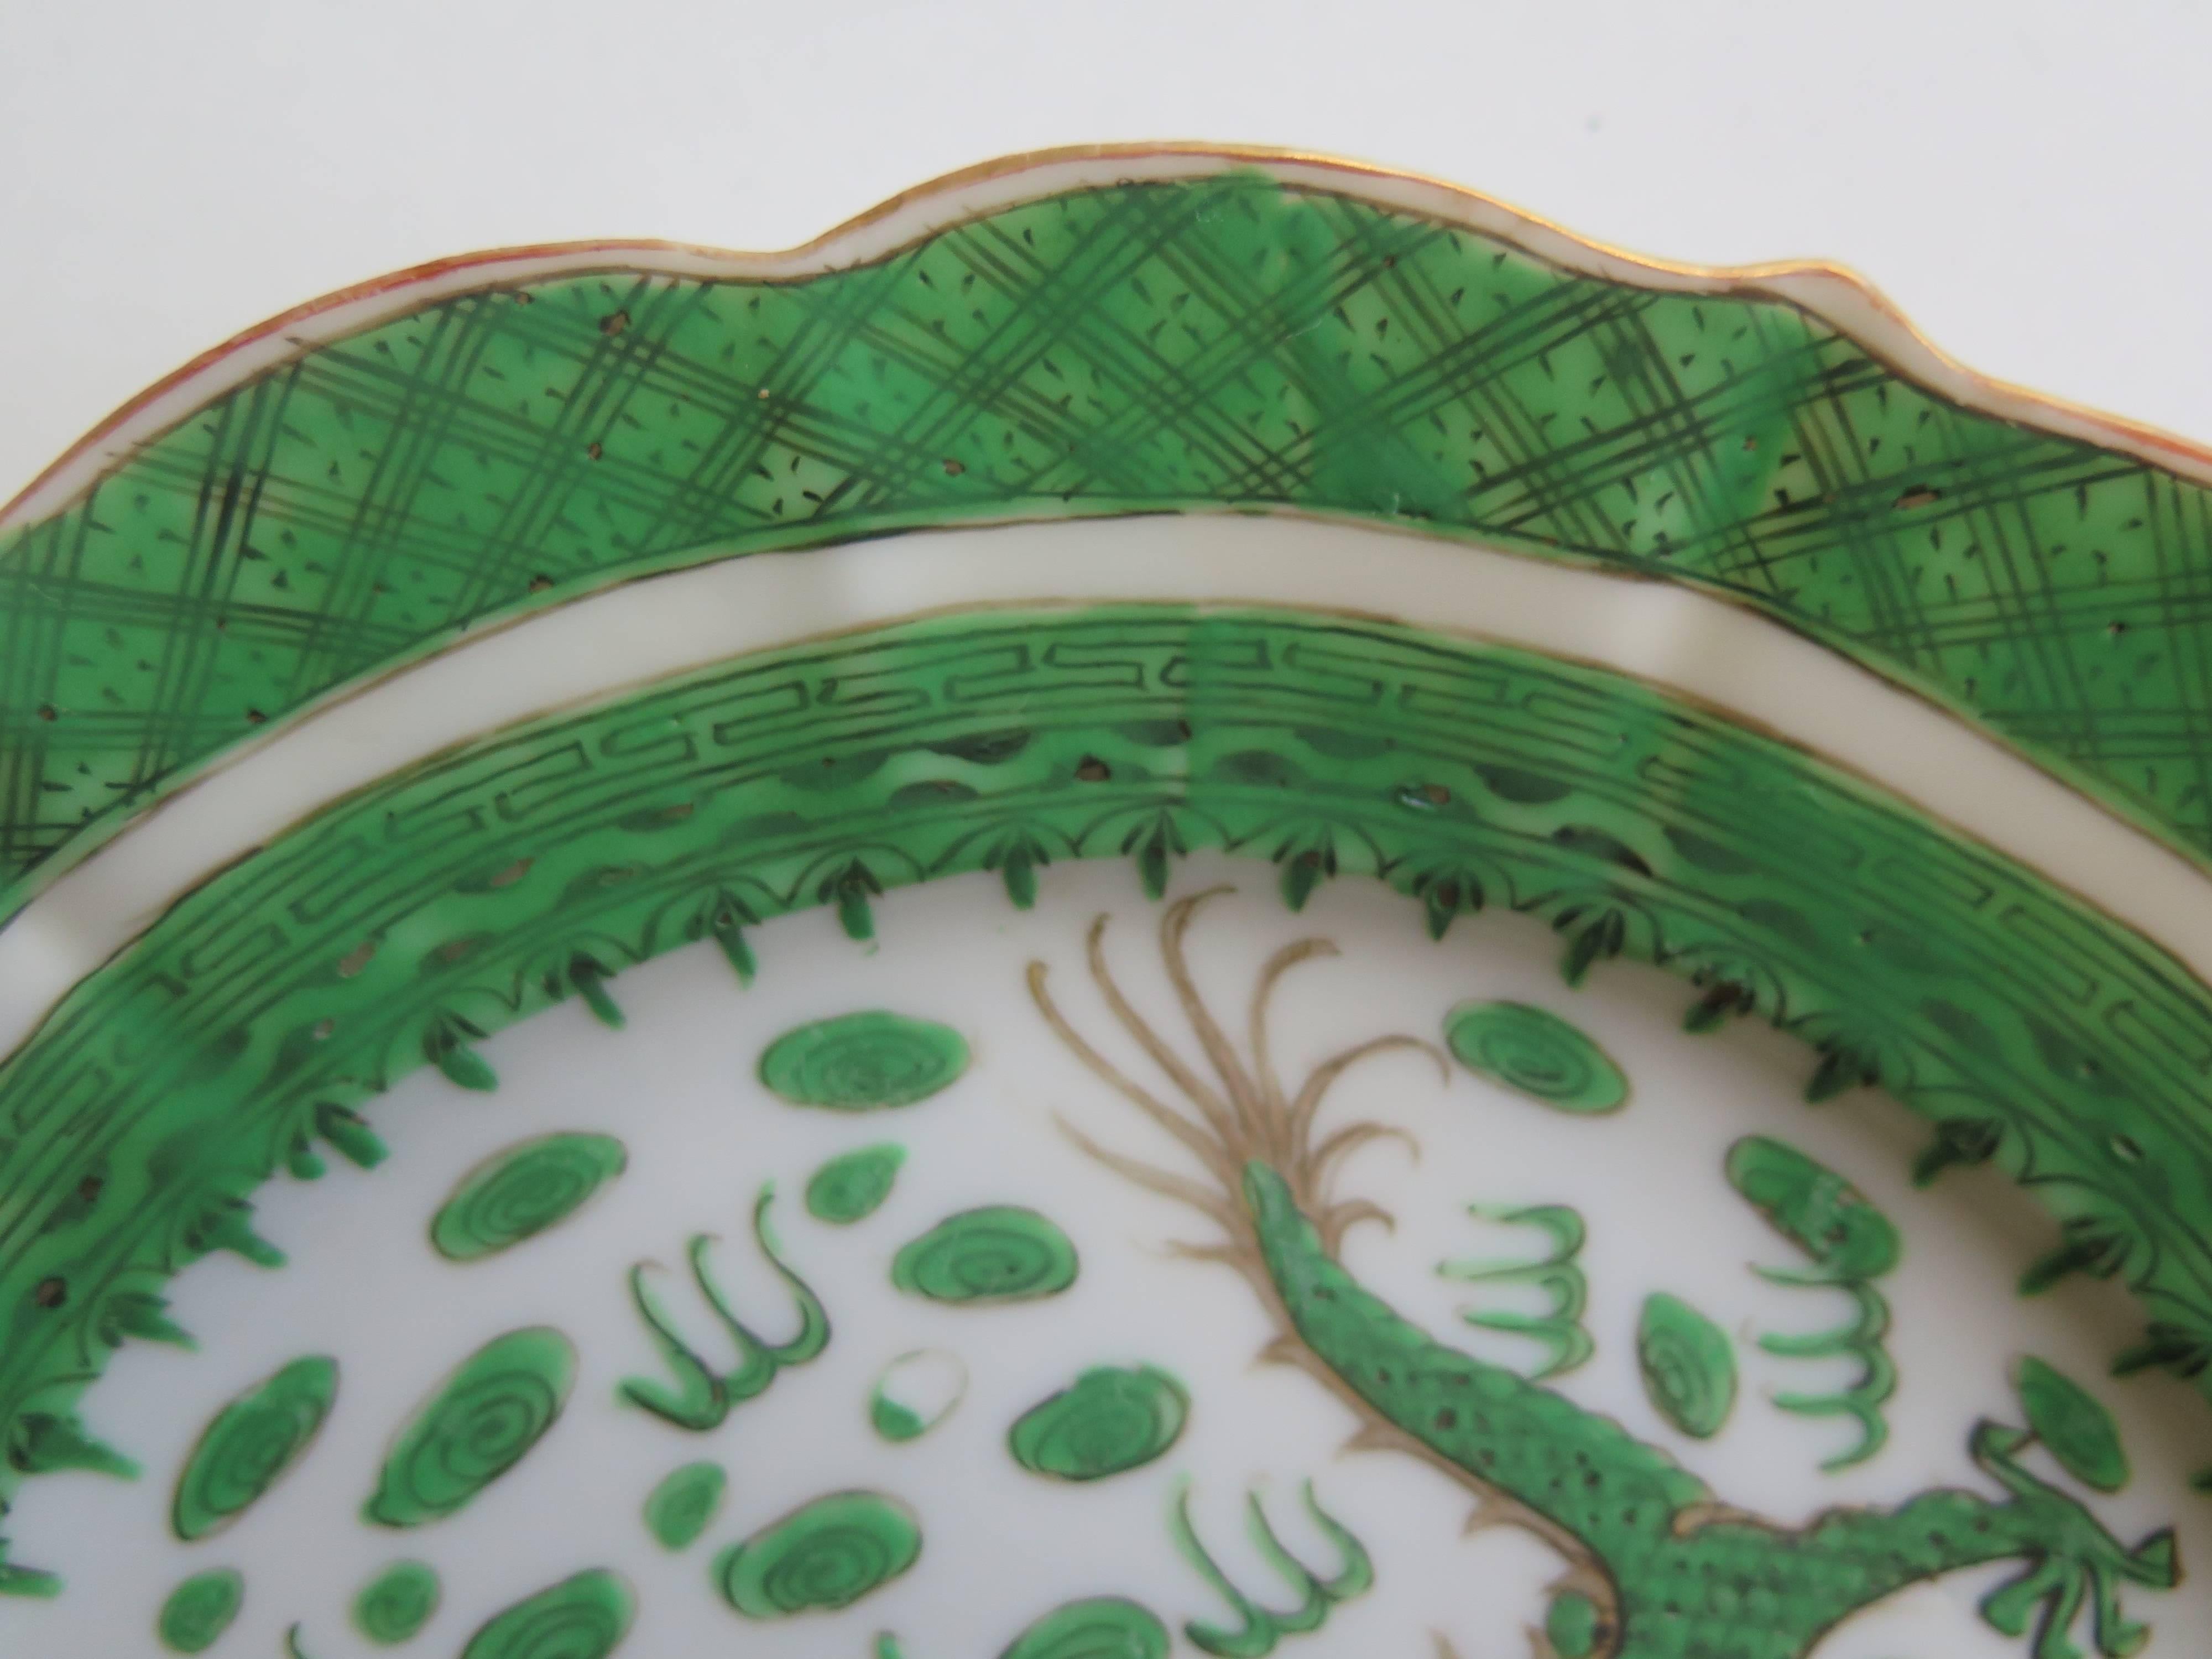 Porcelain 19th Century Chinese Famille Verte Plate, Polychrome Enamel Dragon, Qing